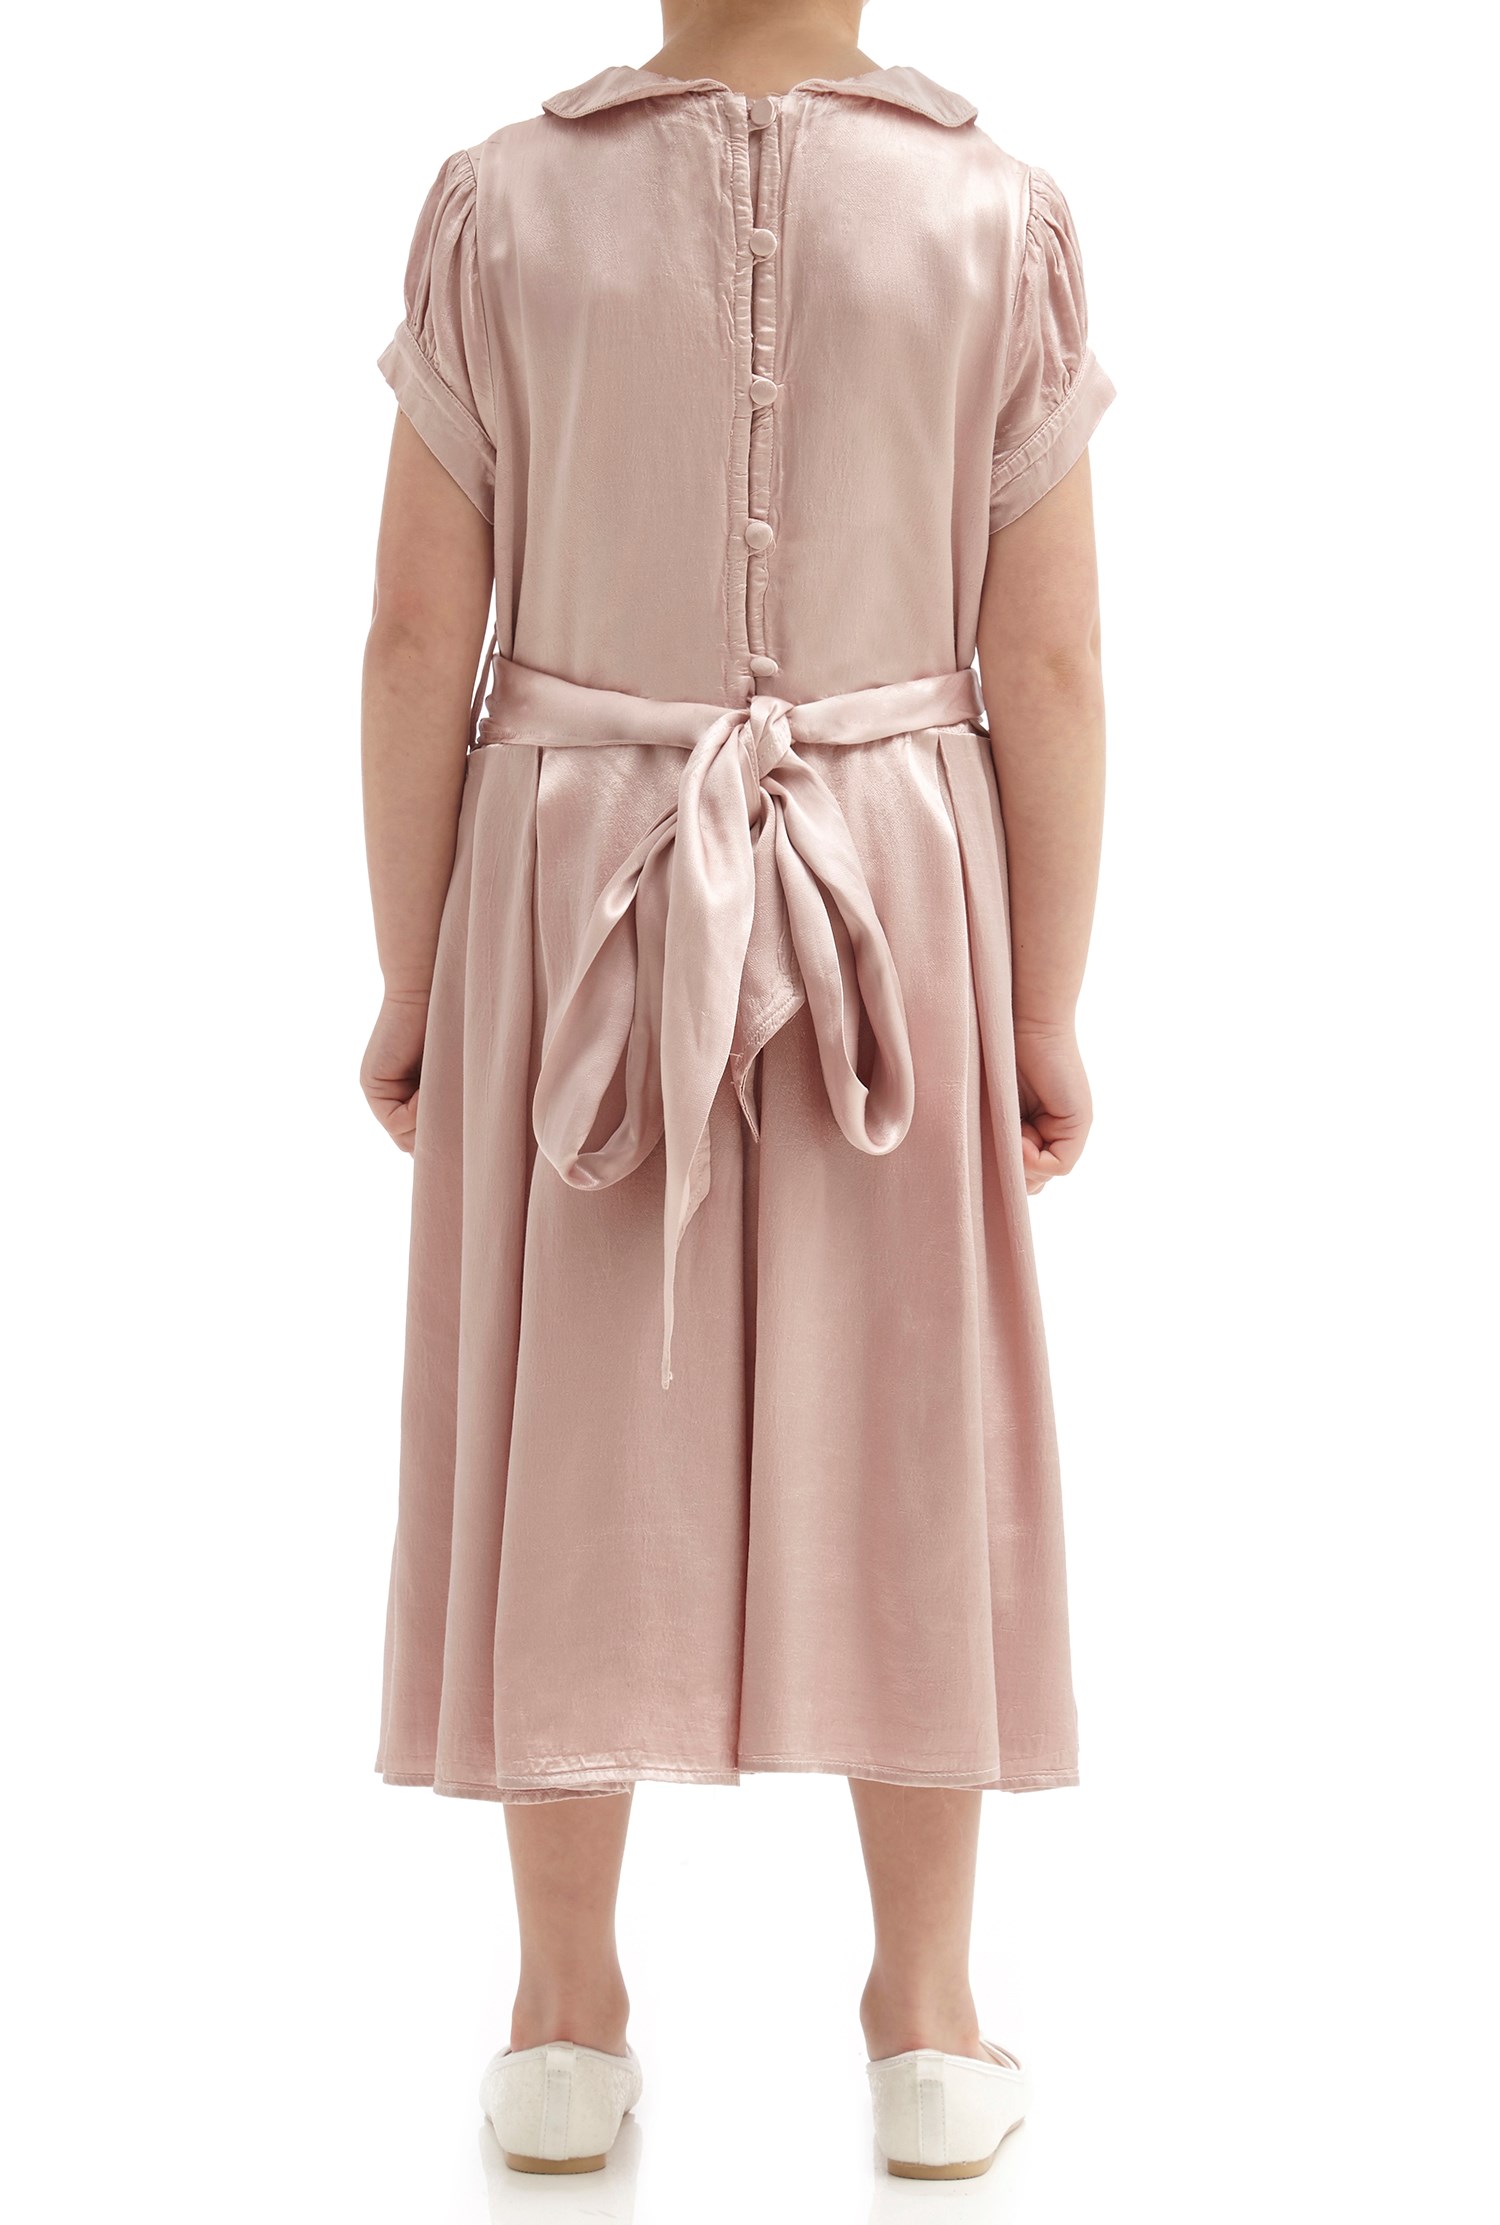 Florence Flower Girl Dress - Boudoir Pink | Ghost.co.uk